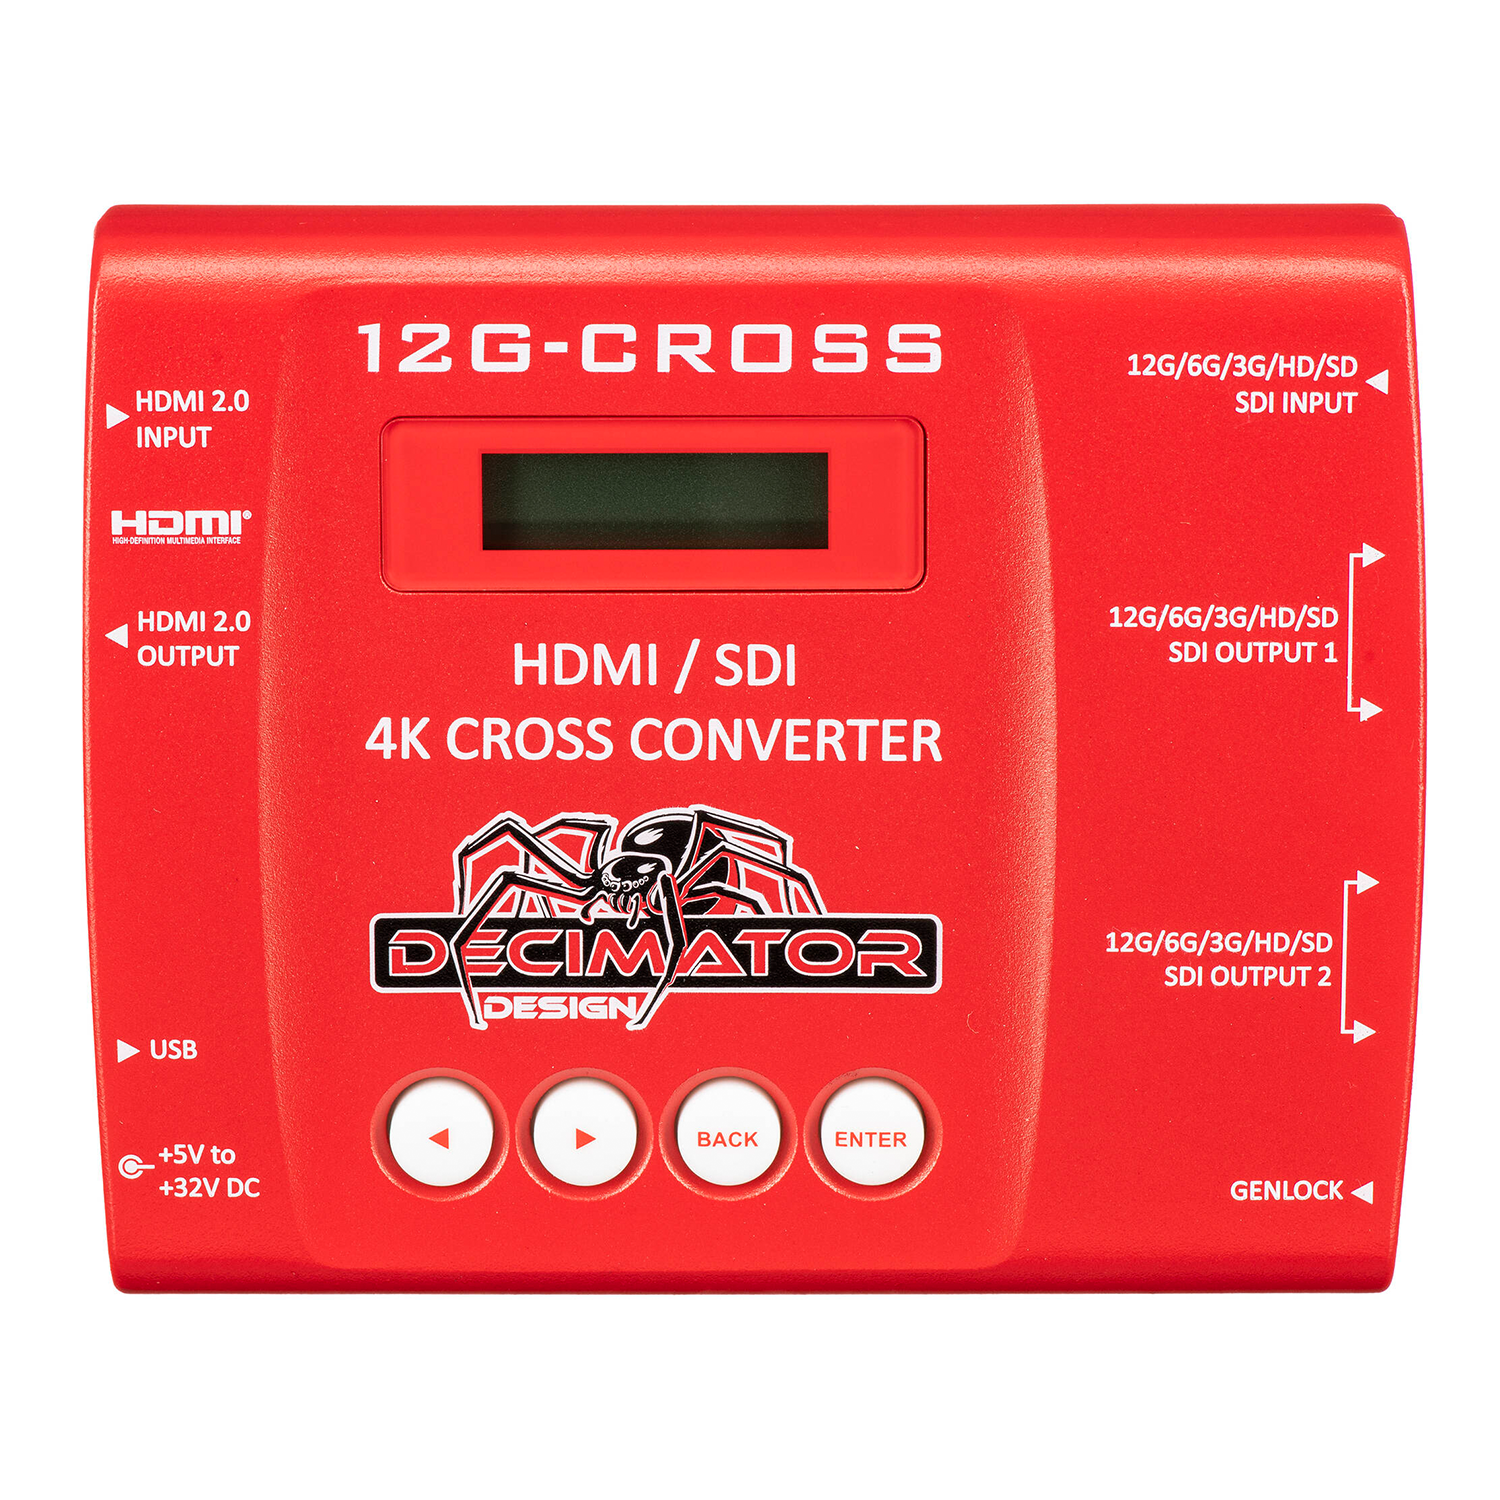 Decimator 12G-CROSS HDMI / SDI 4K Cross Converter